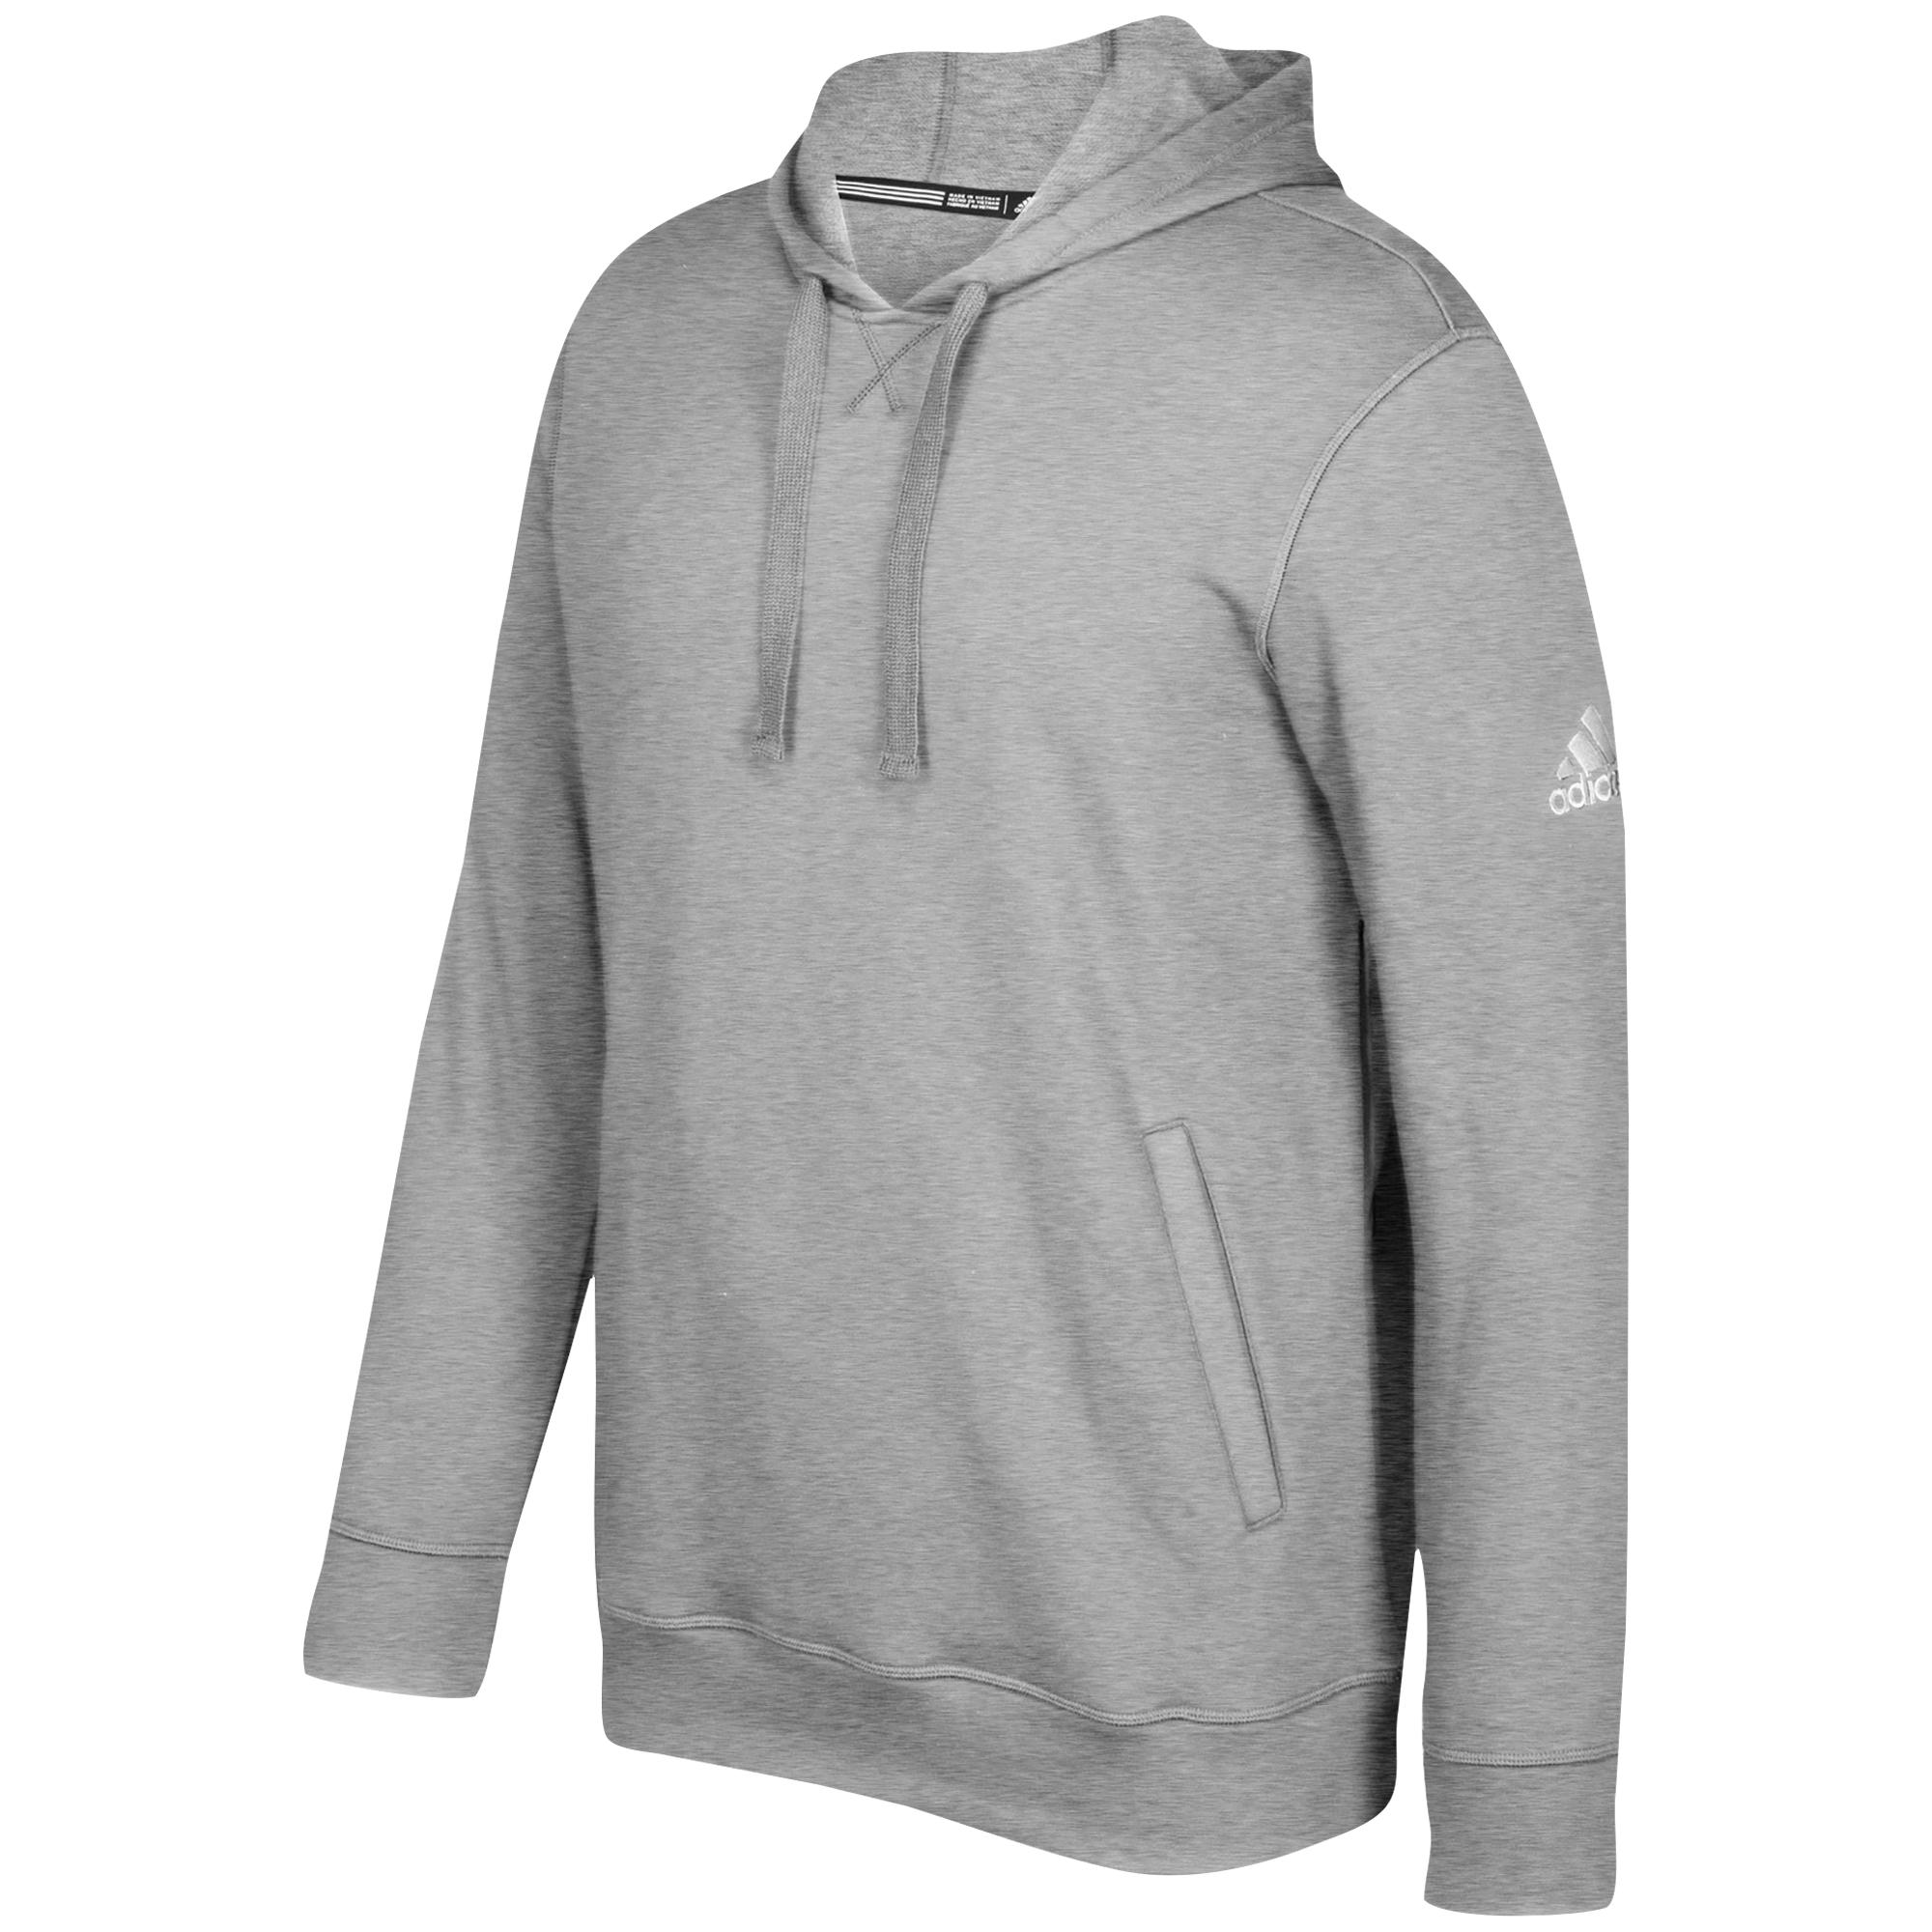 adidas Team Fleece Hoodie in Gray for Men - Lyst